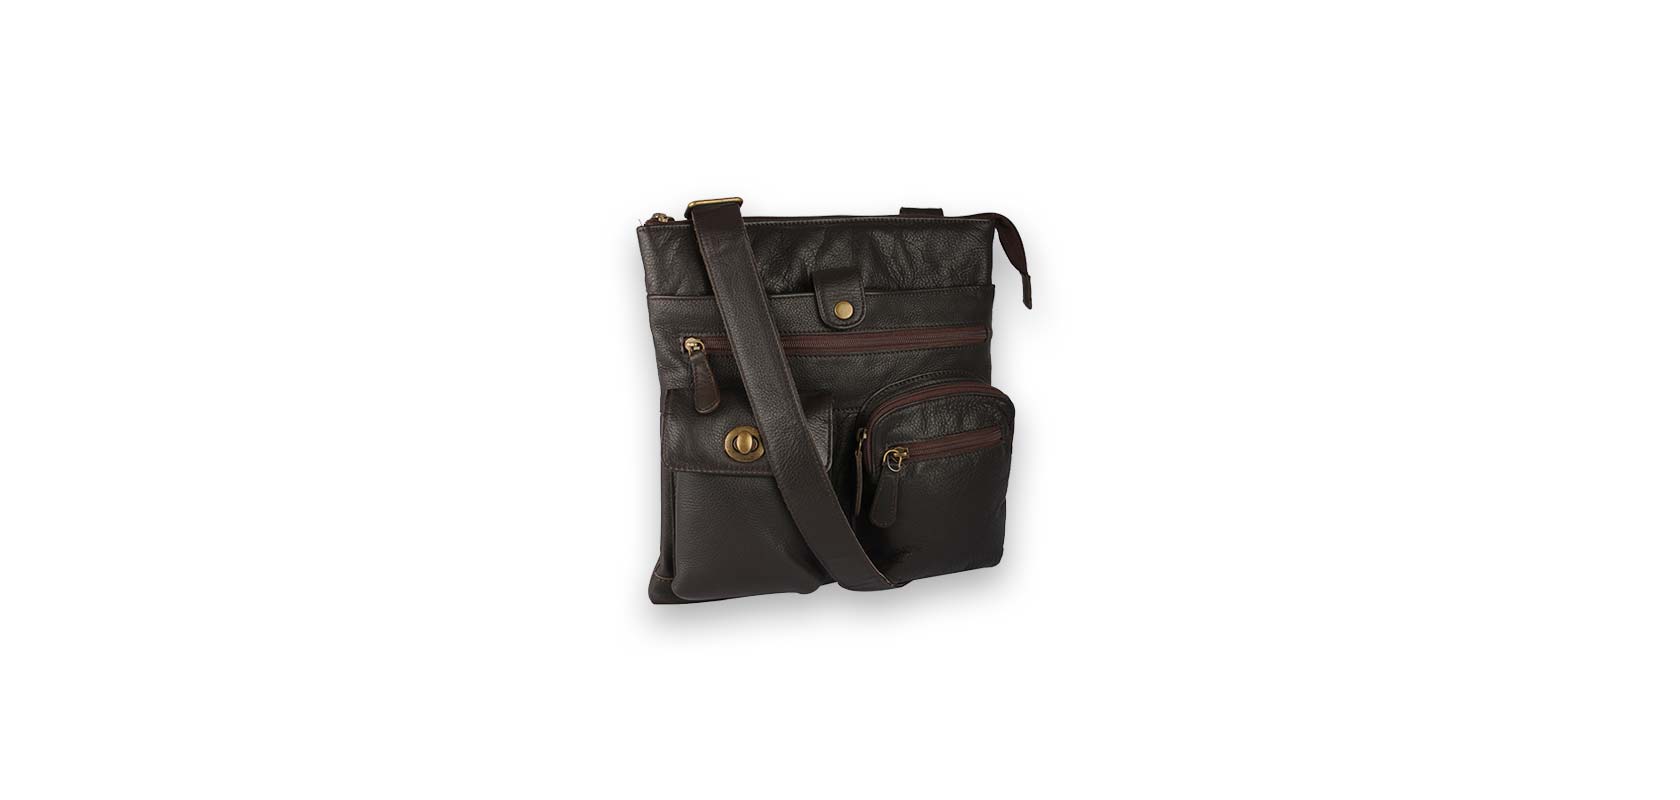 Spazio Leathers sling bag